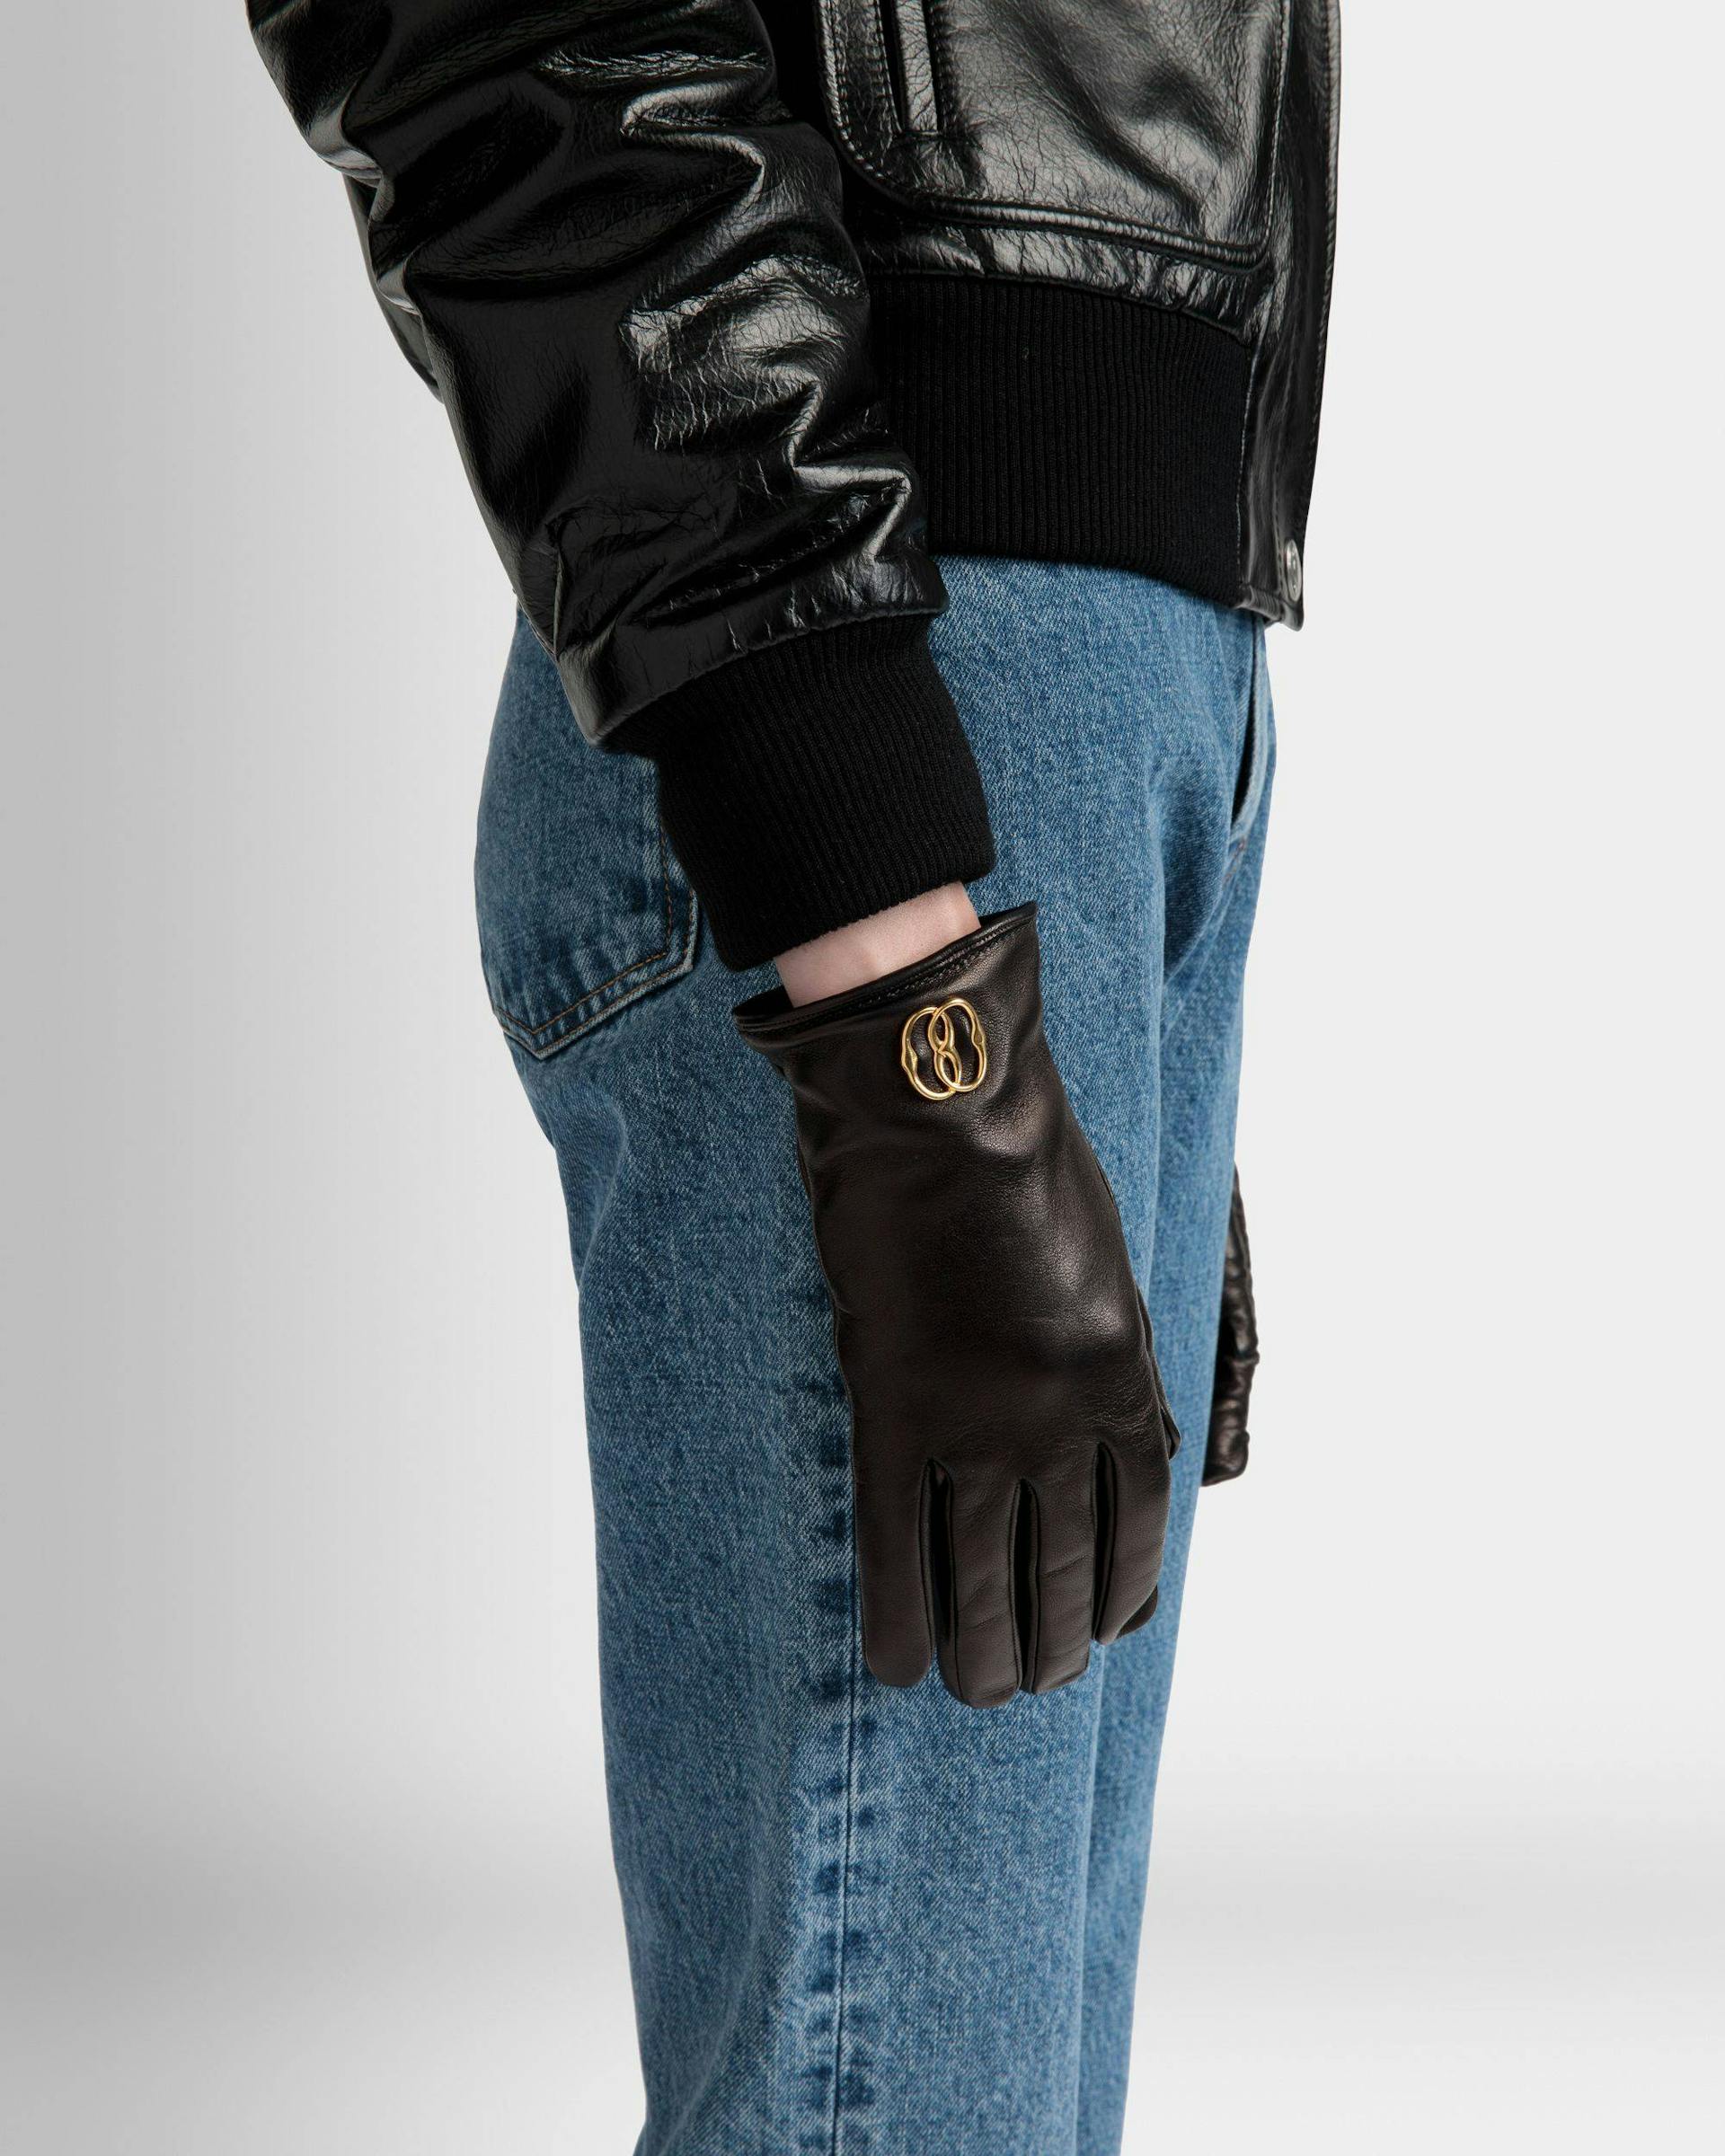 Emblem Handschuhe Aus Leder In Schwarz - Damen - Bally - 02